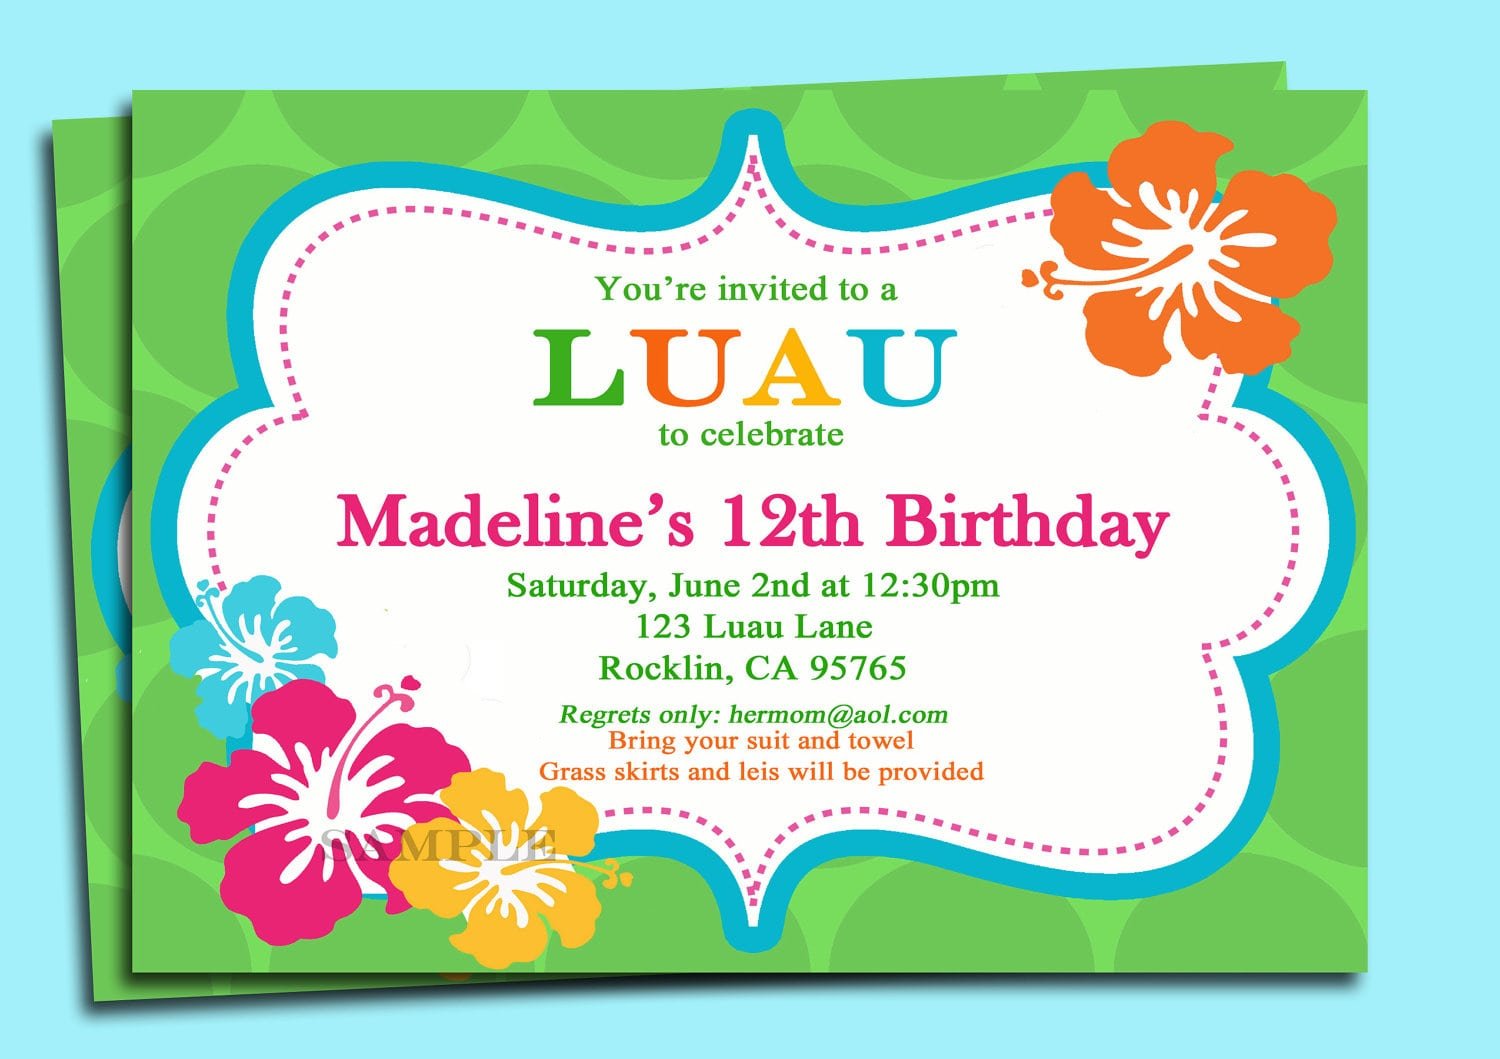 luau-party-invitation-free-printable